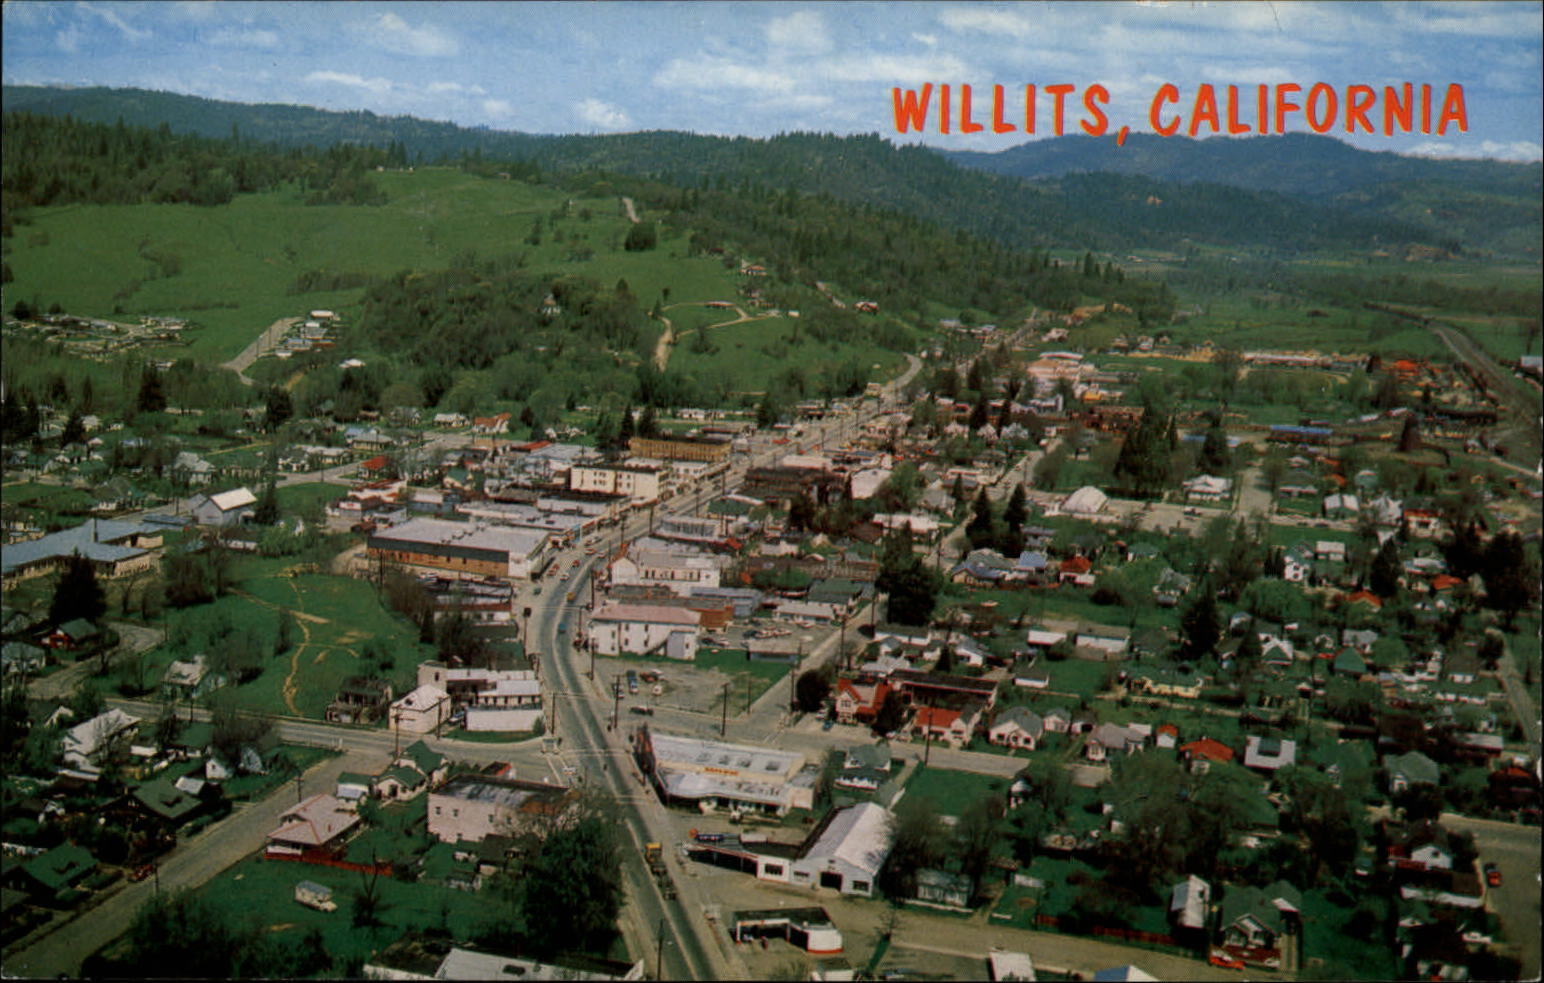 Willits California downtown aerial view 1950s vintage unused postcard